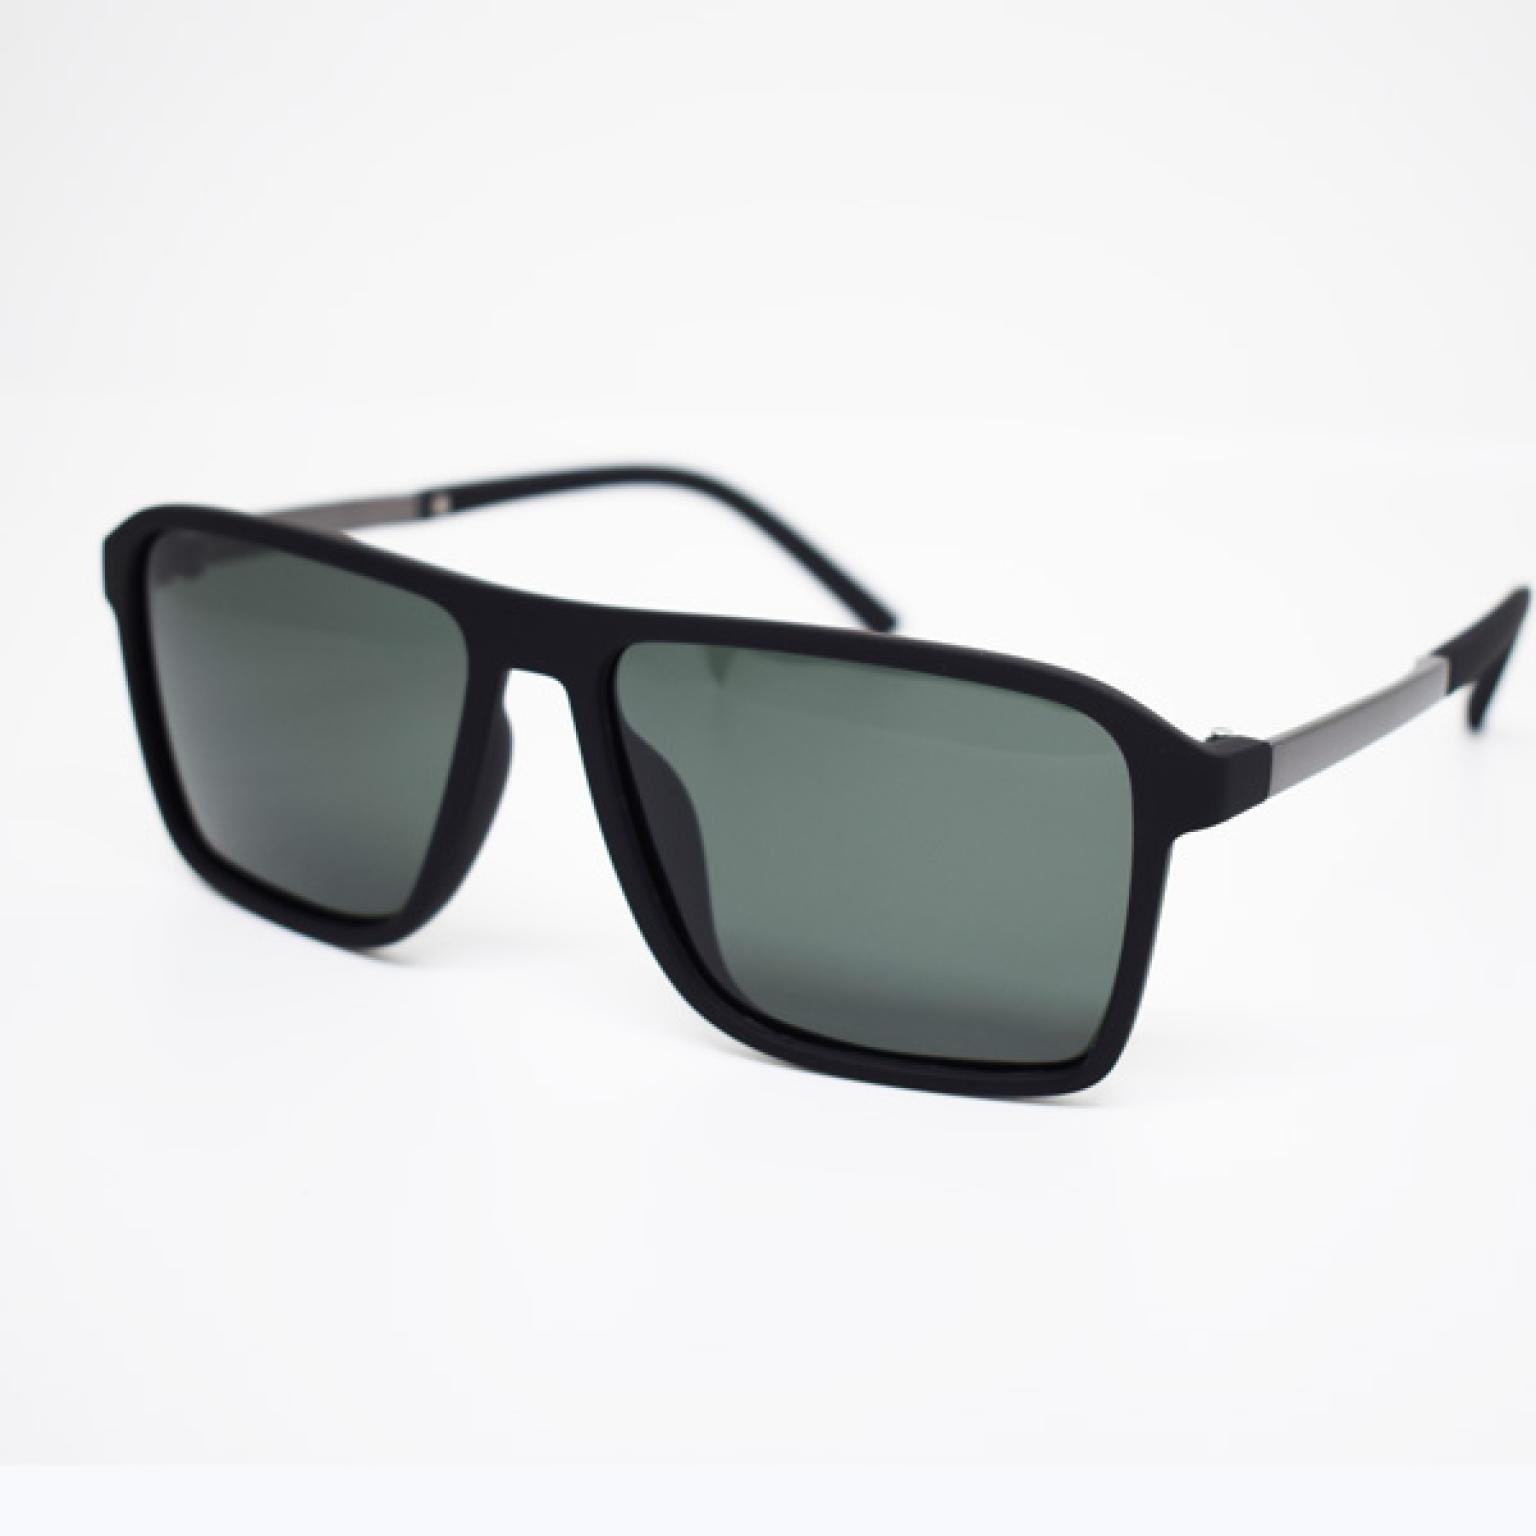 New Polarized Sunglasses Men Mirrored Driving Glasses Black Rectangle Sunglasses Male Cool Fashion Classic S6076